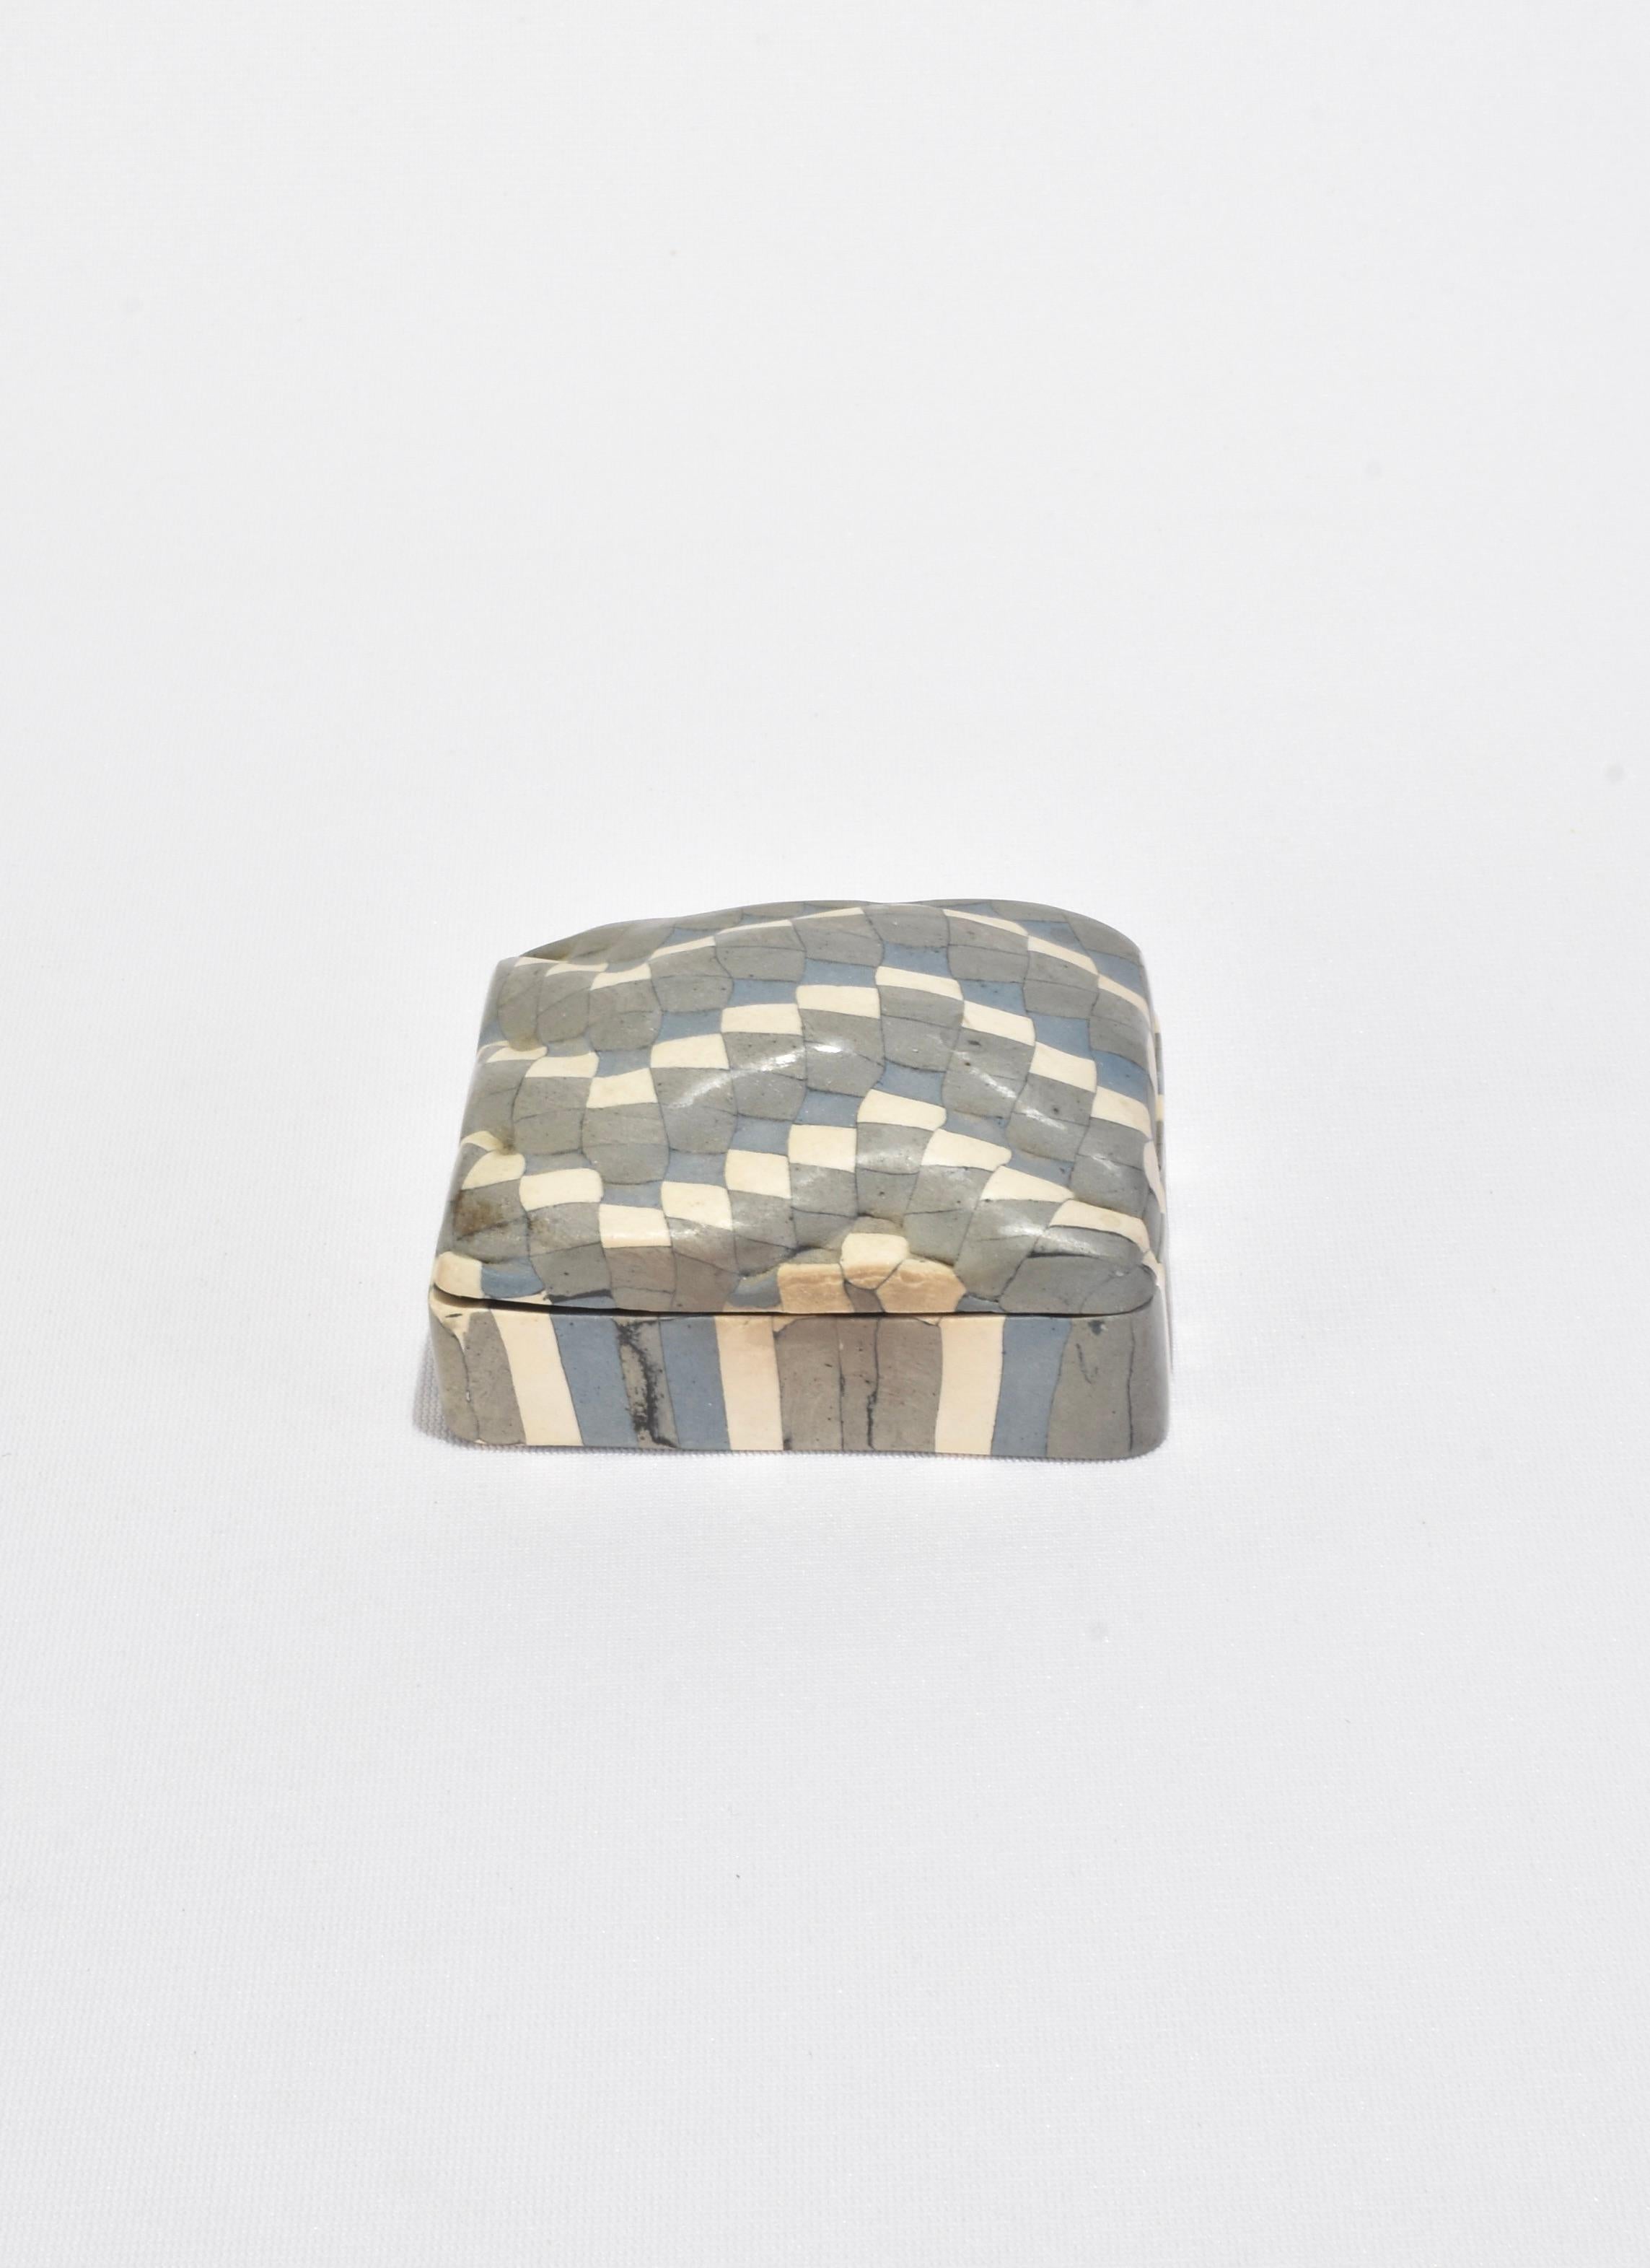 Hand-Crafted Checkered Ceramic Box